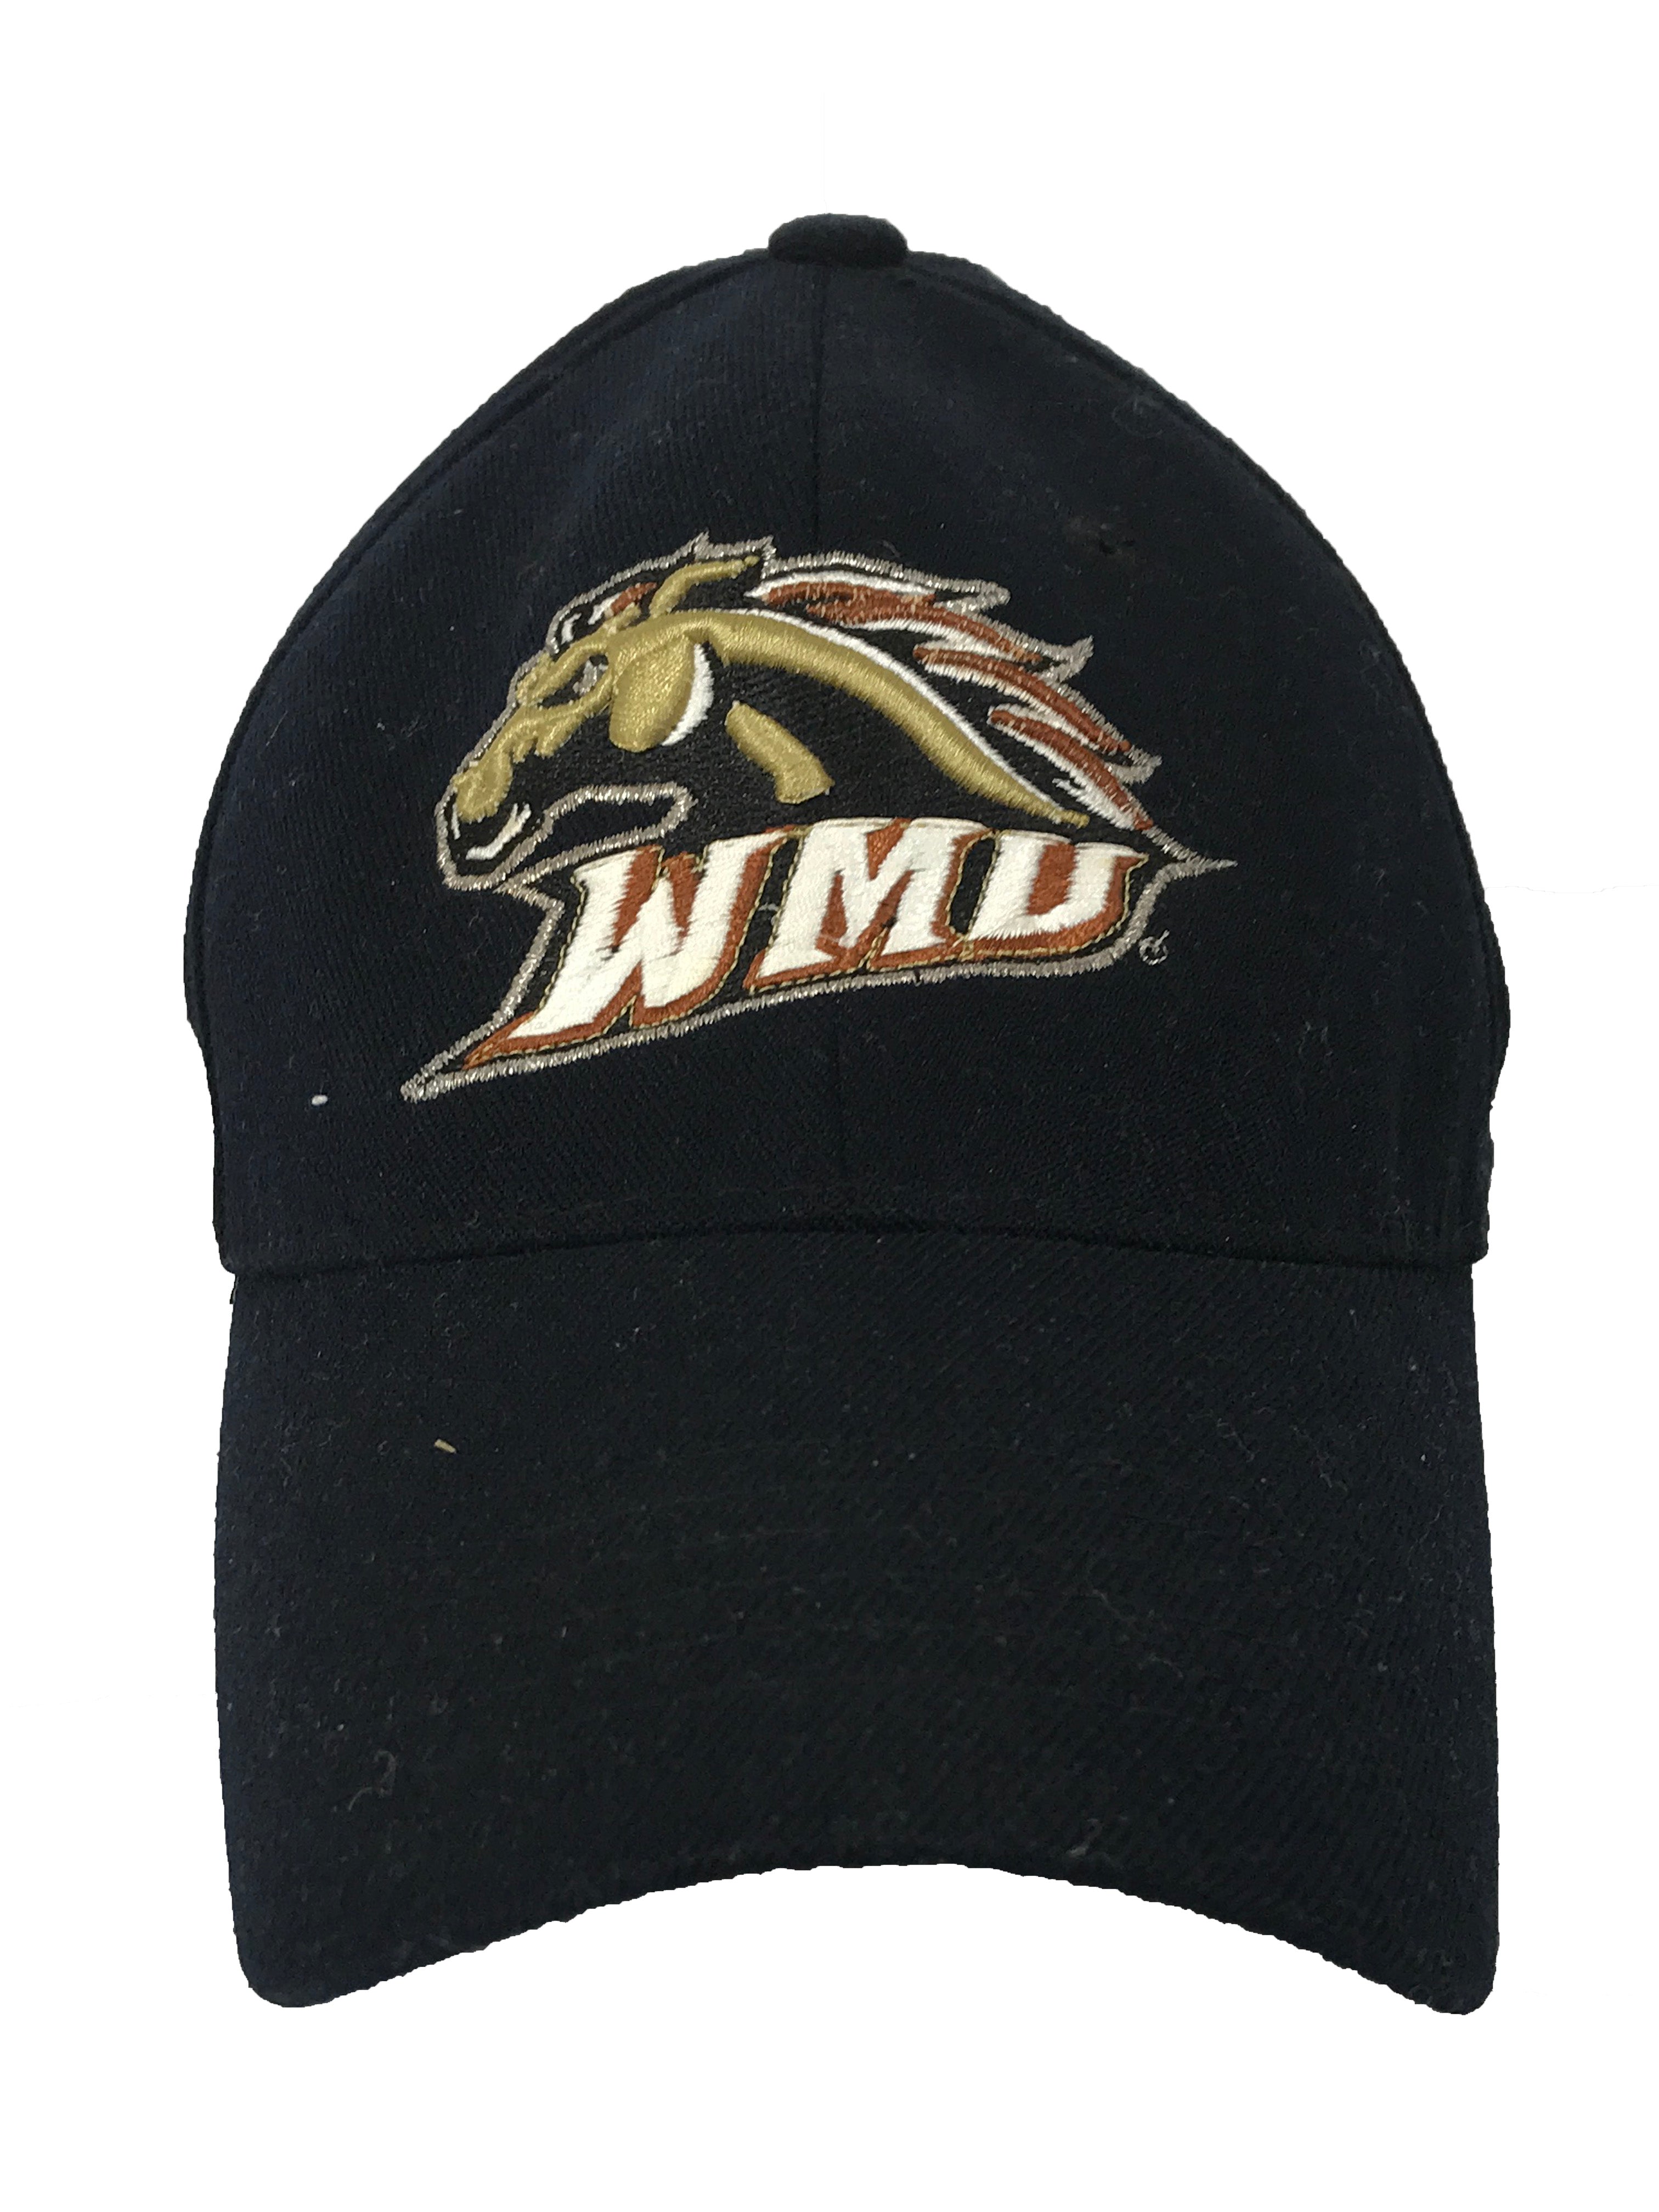 Western Michigan University Black Hat